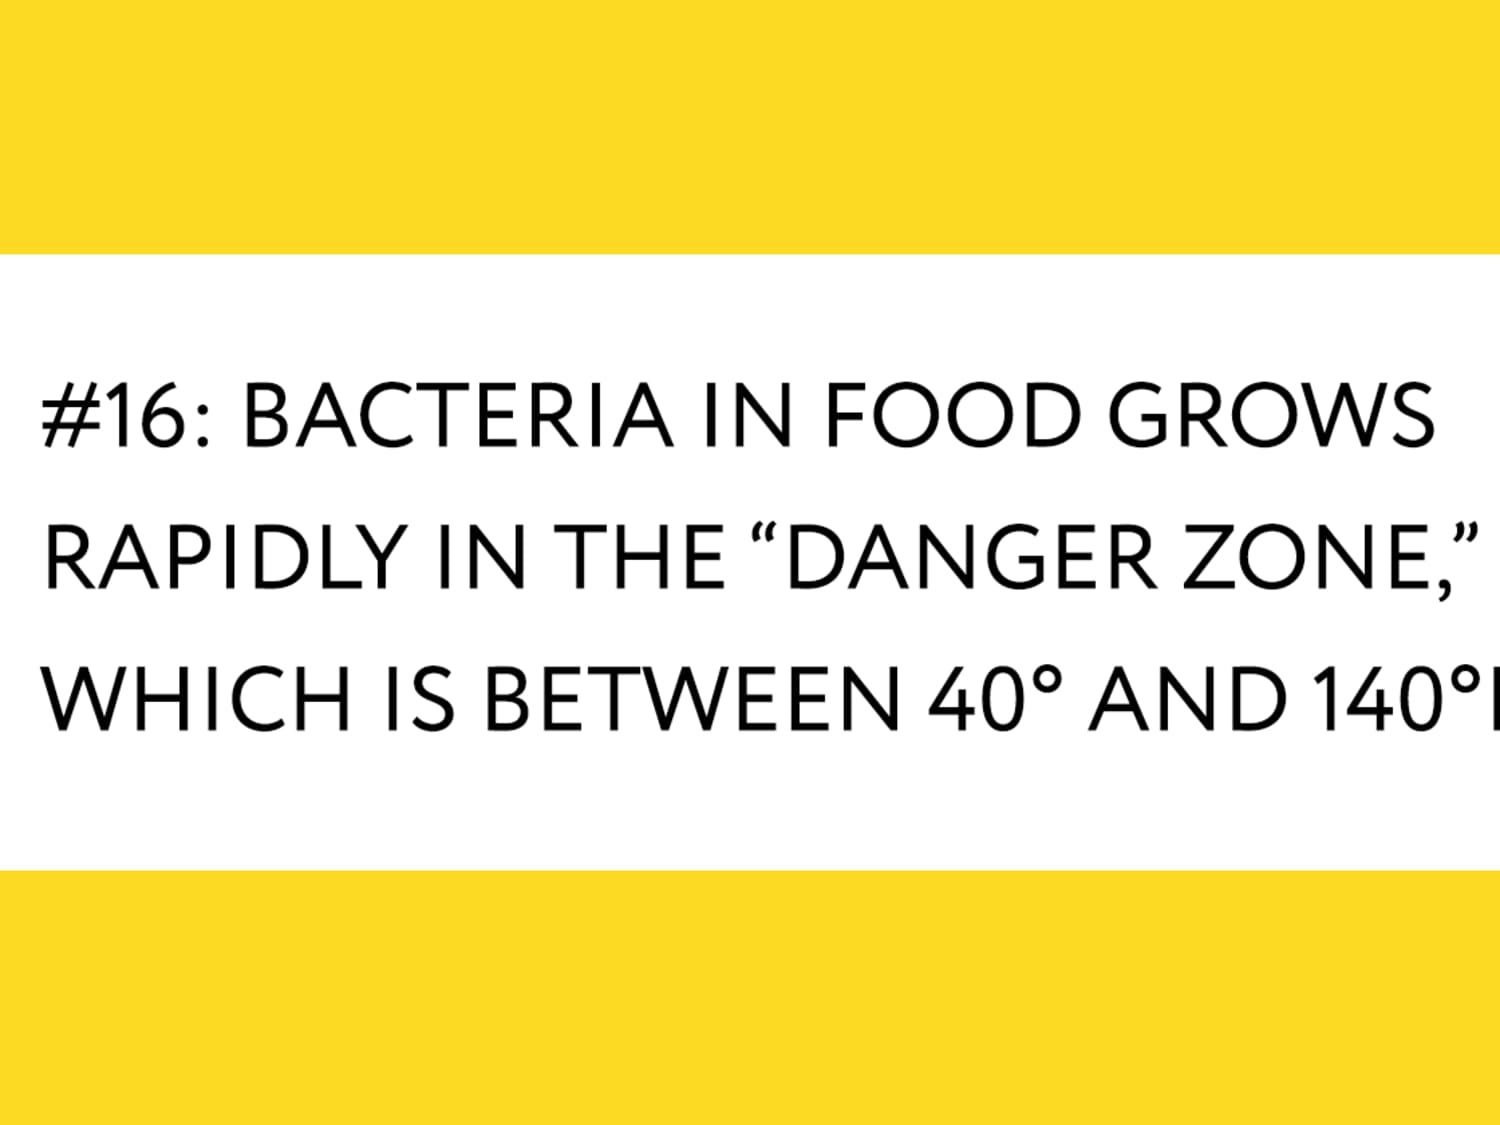 Food Danger Zone Chart